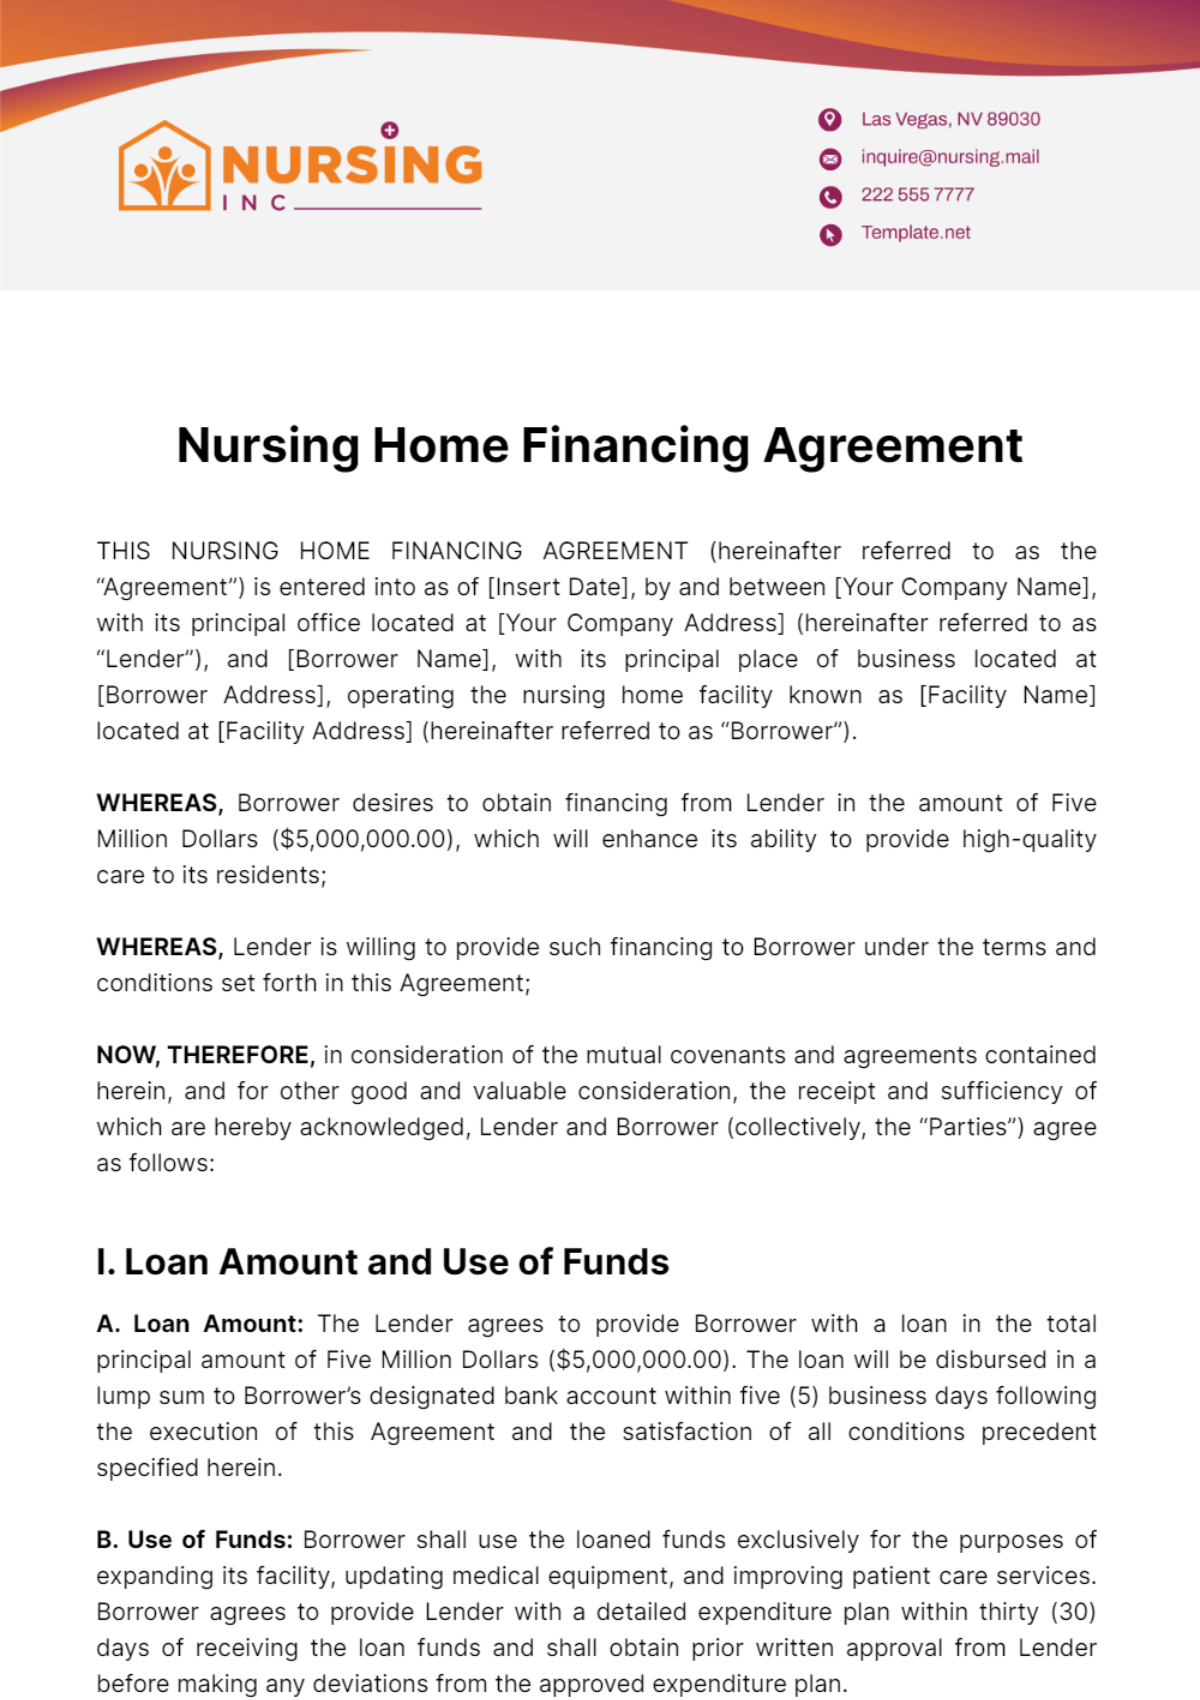 Nursing Home Financing Agreement Template